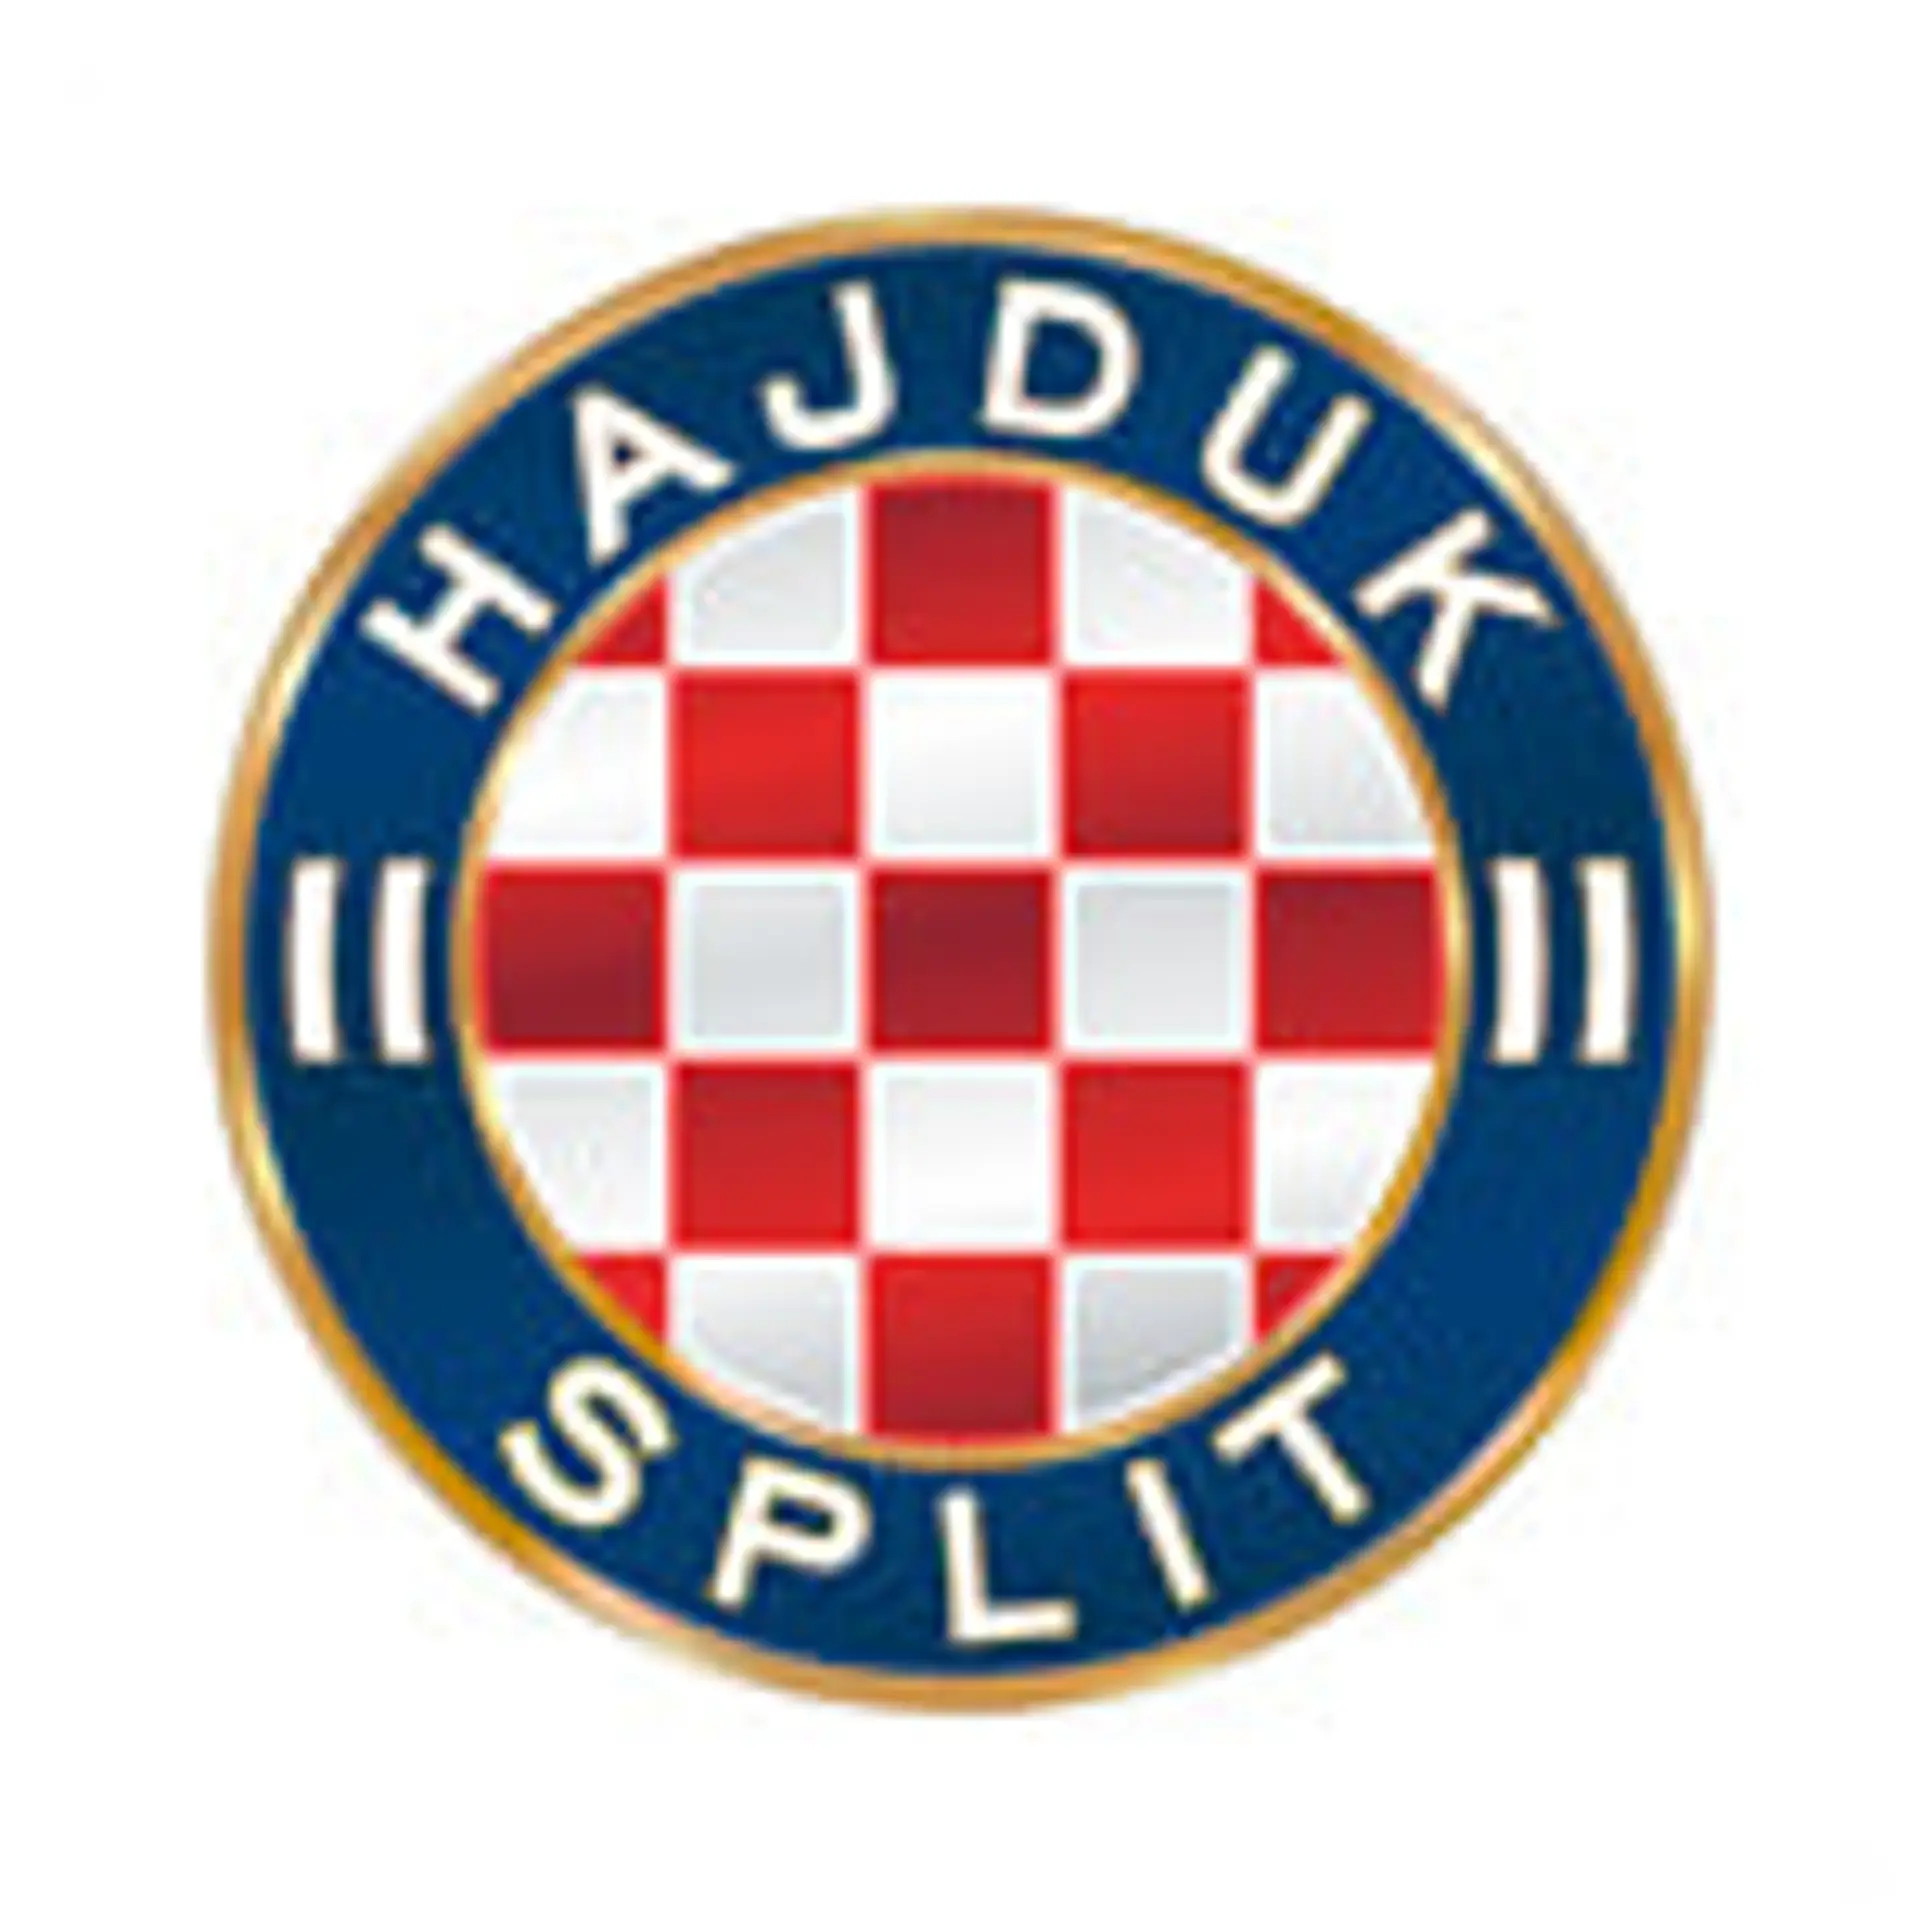 NK Osijek vs Hajduk Split: Live Score, Stream and H2H results 2/3